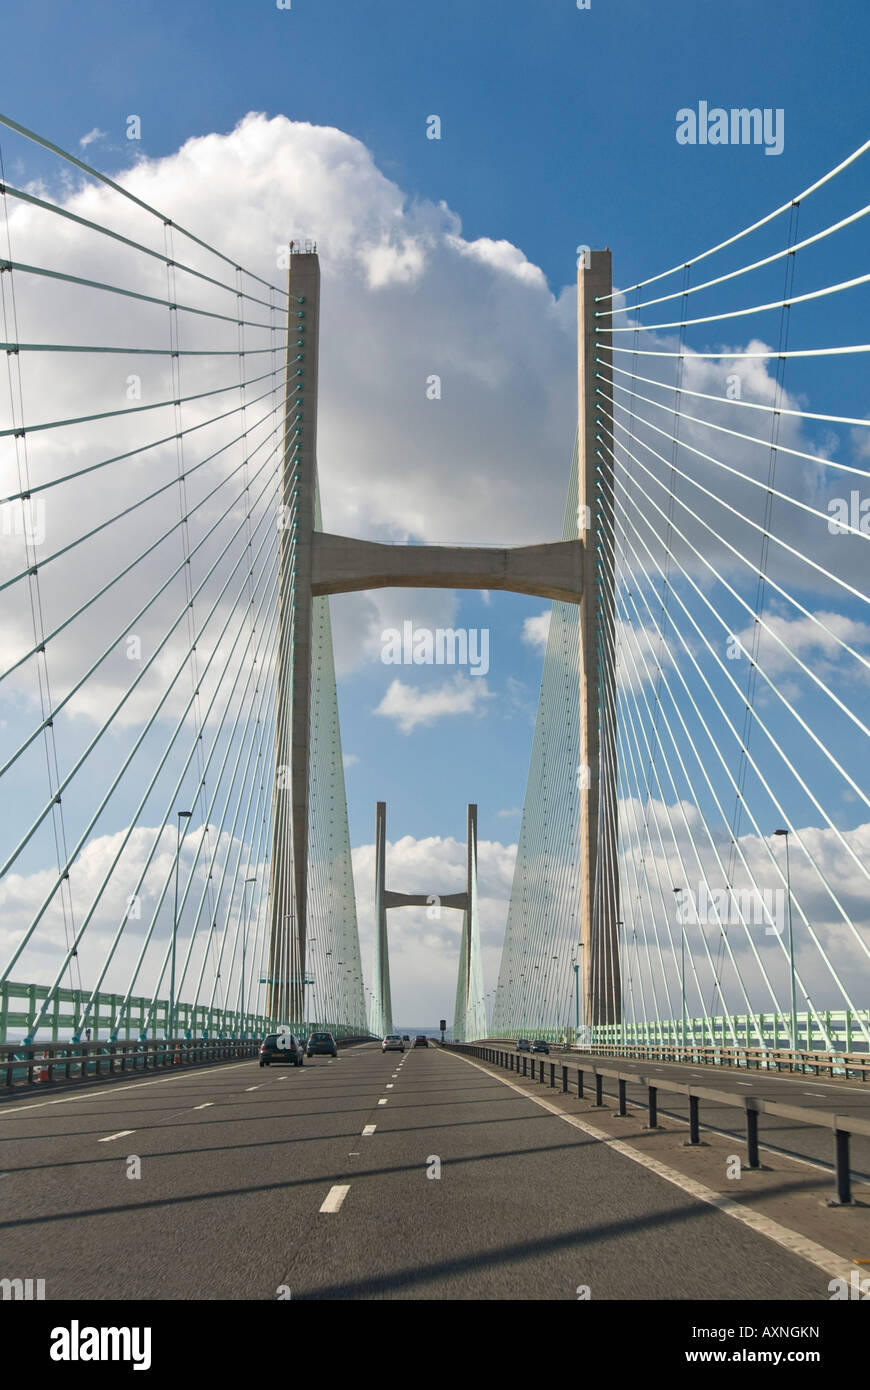 Verticale di vista ravvicinata del secondo ponte Severn [ail groesfan hafren] aka il Principe del Galles (ponte Pont Tywysog Cymru) attraversando la Severn estua Foto Stock